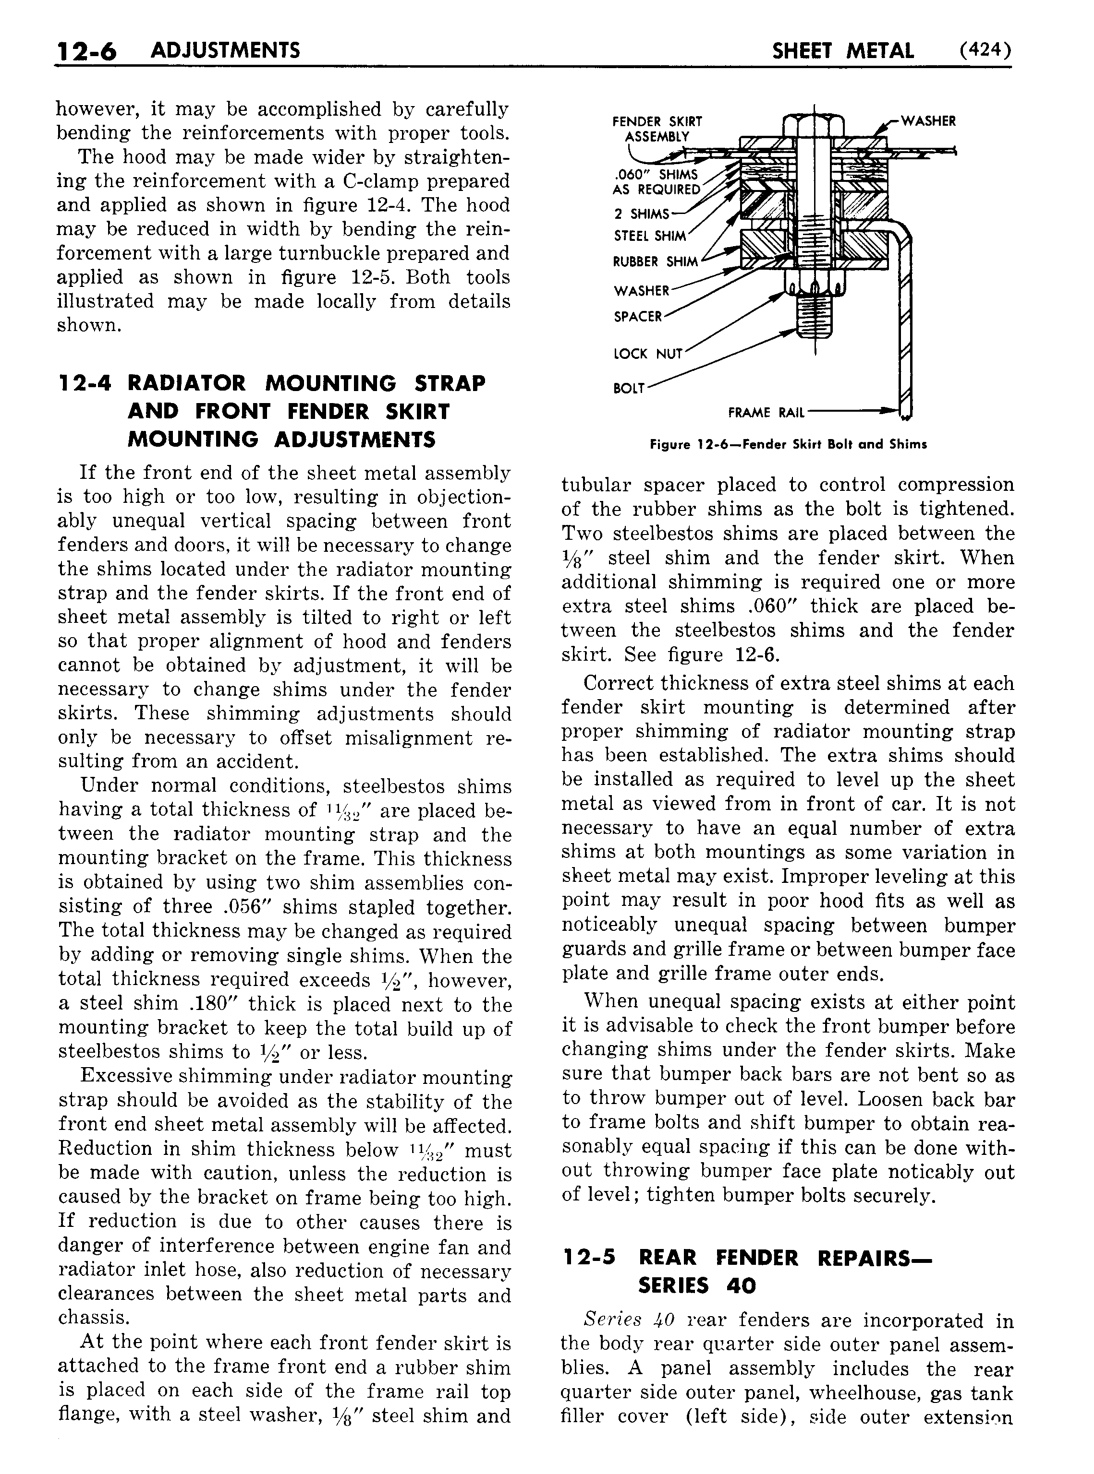 n_13 1951 Buick Shop Manual - Sheet Metal-006-006.jpg